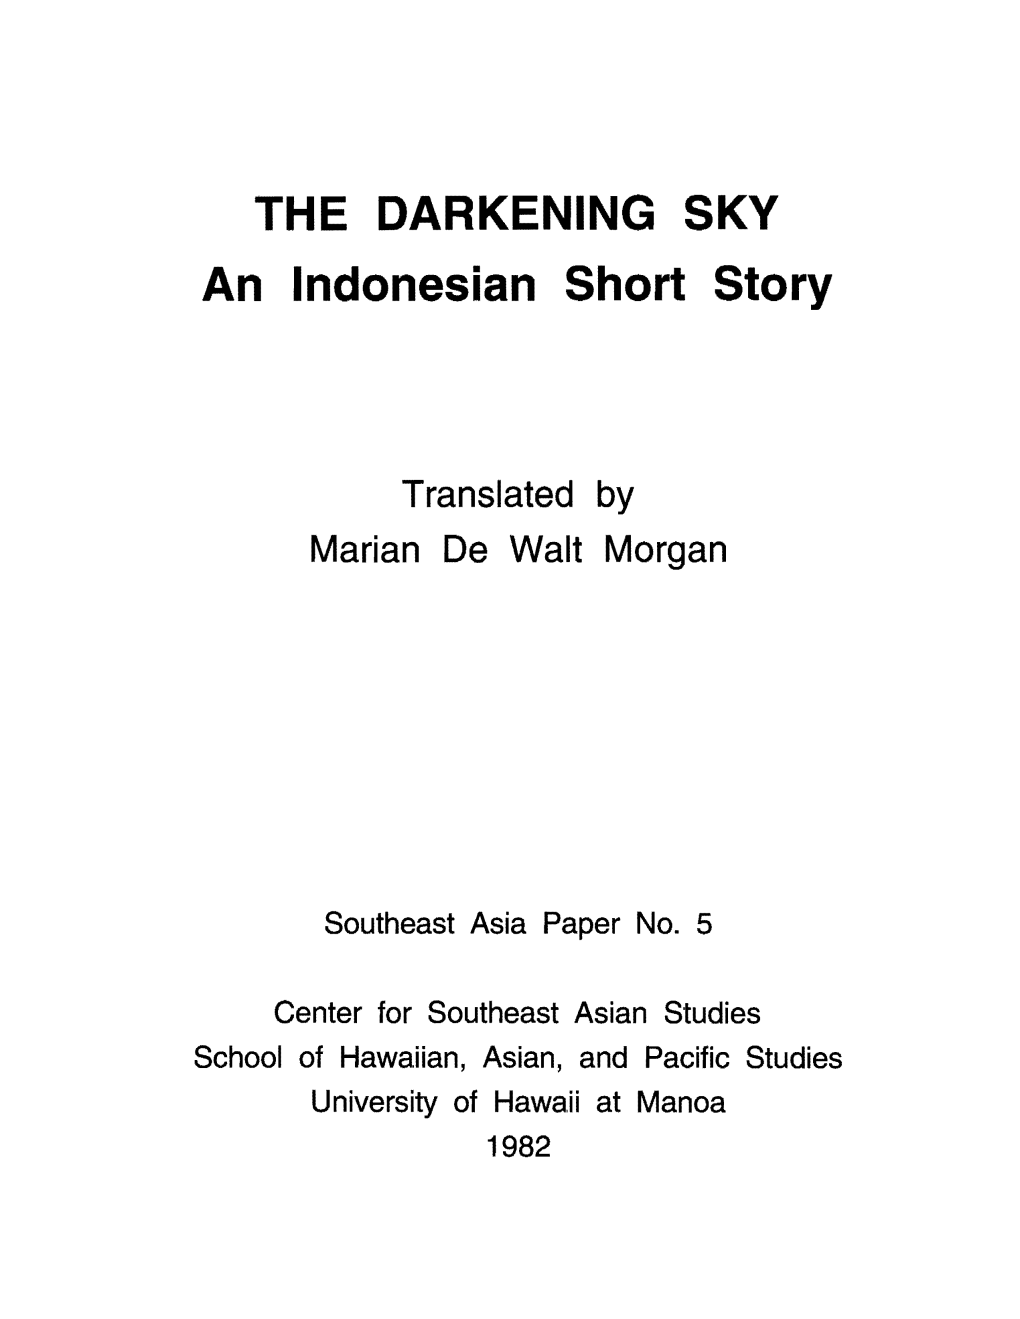 THE DARKENING SKY an Indonesian Short Story